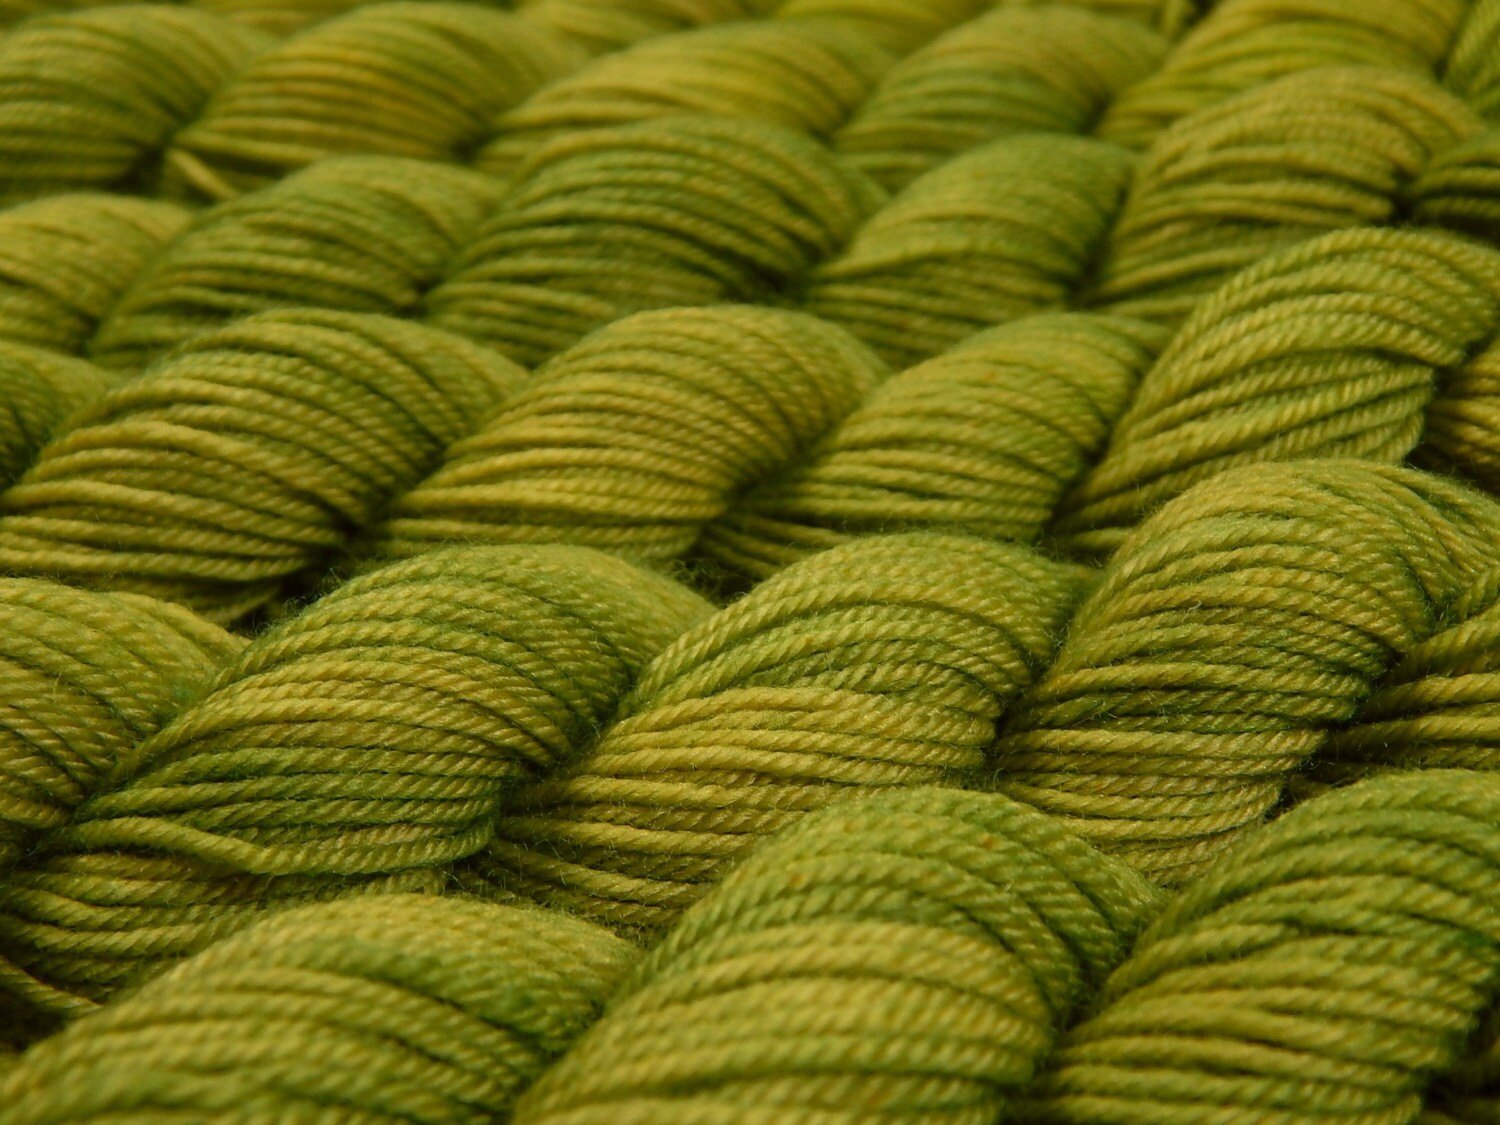 Sock Yarn Mini Skeins, Hand Dyed Yarn, Sock Weight 4 Ply Superwash Merino Wool Yarn - Lettuce Tonal - Bright Yellow Green Fingering Yarn